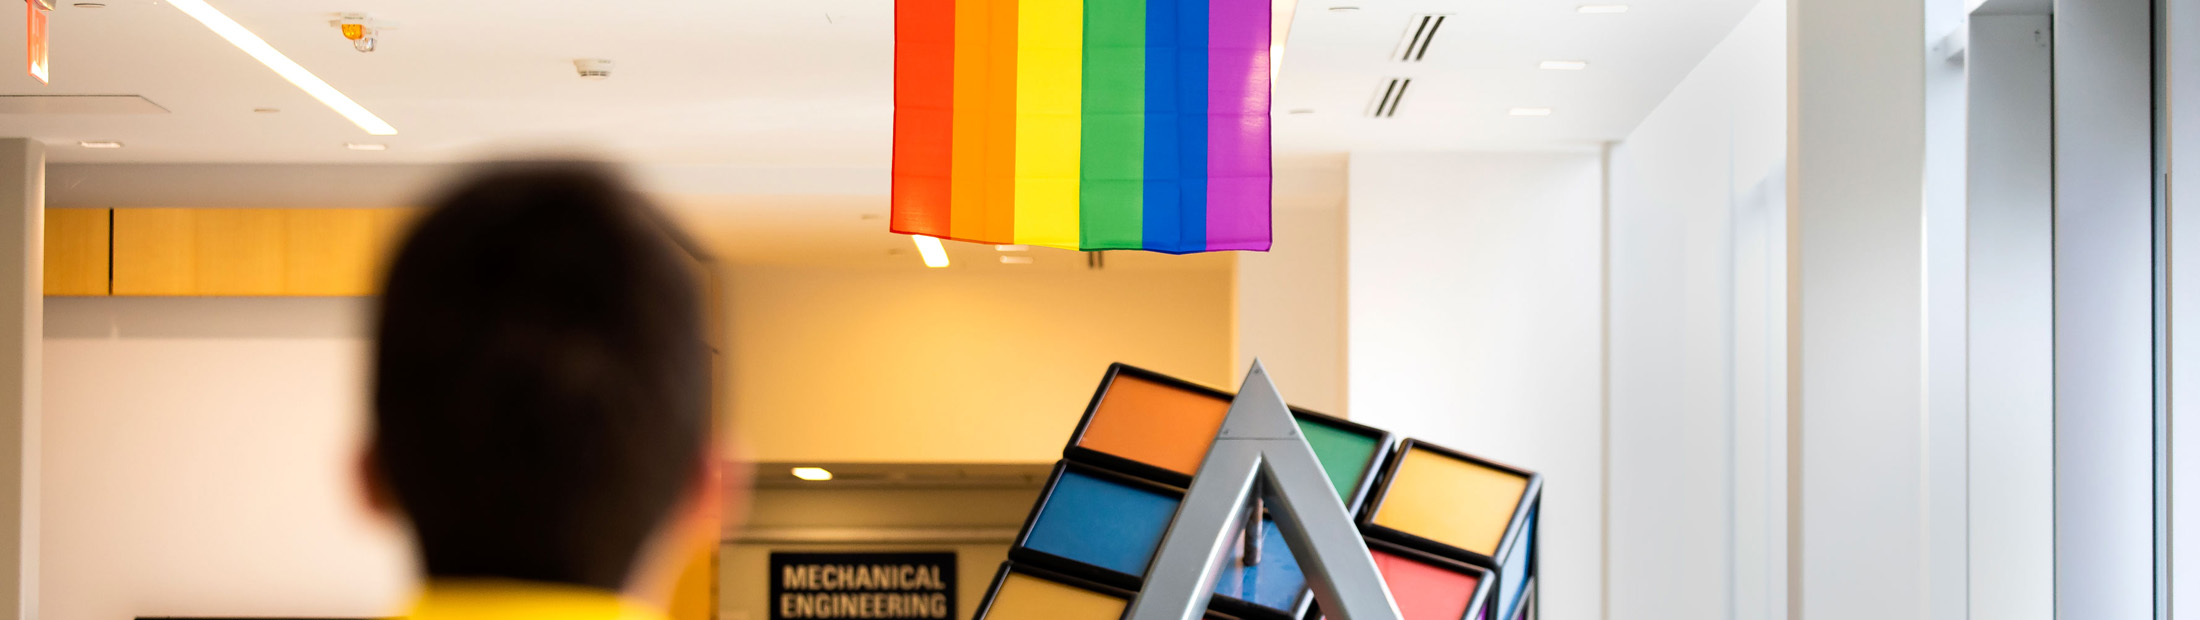 Image of LGBTQA+ flag